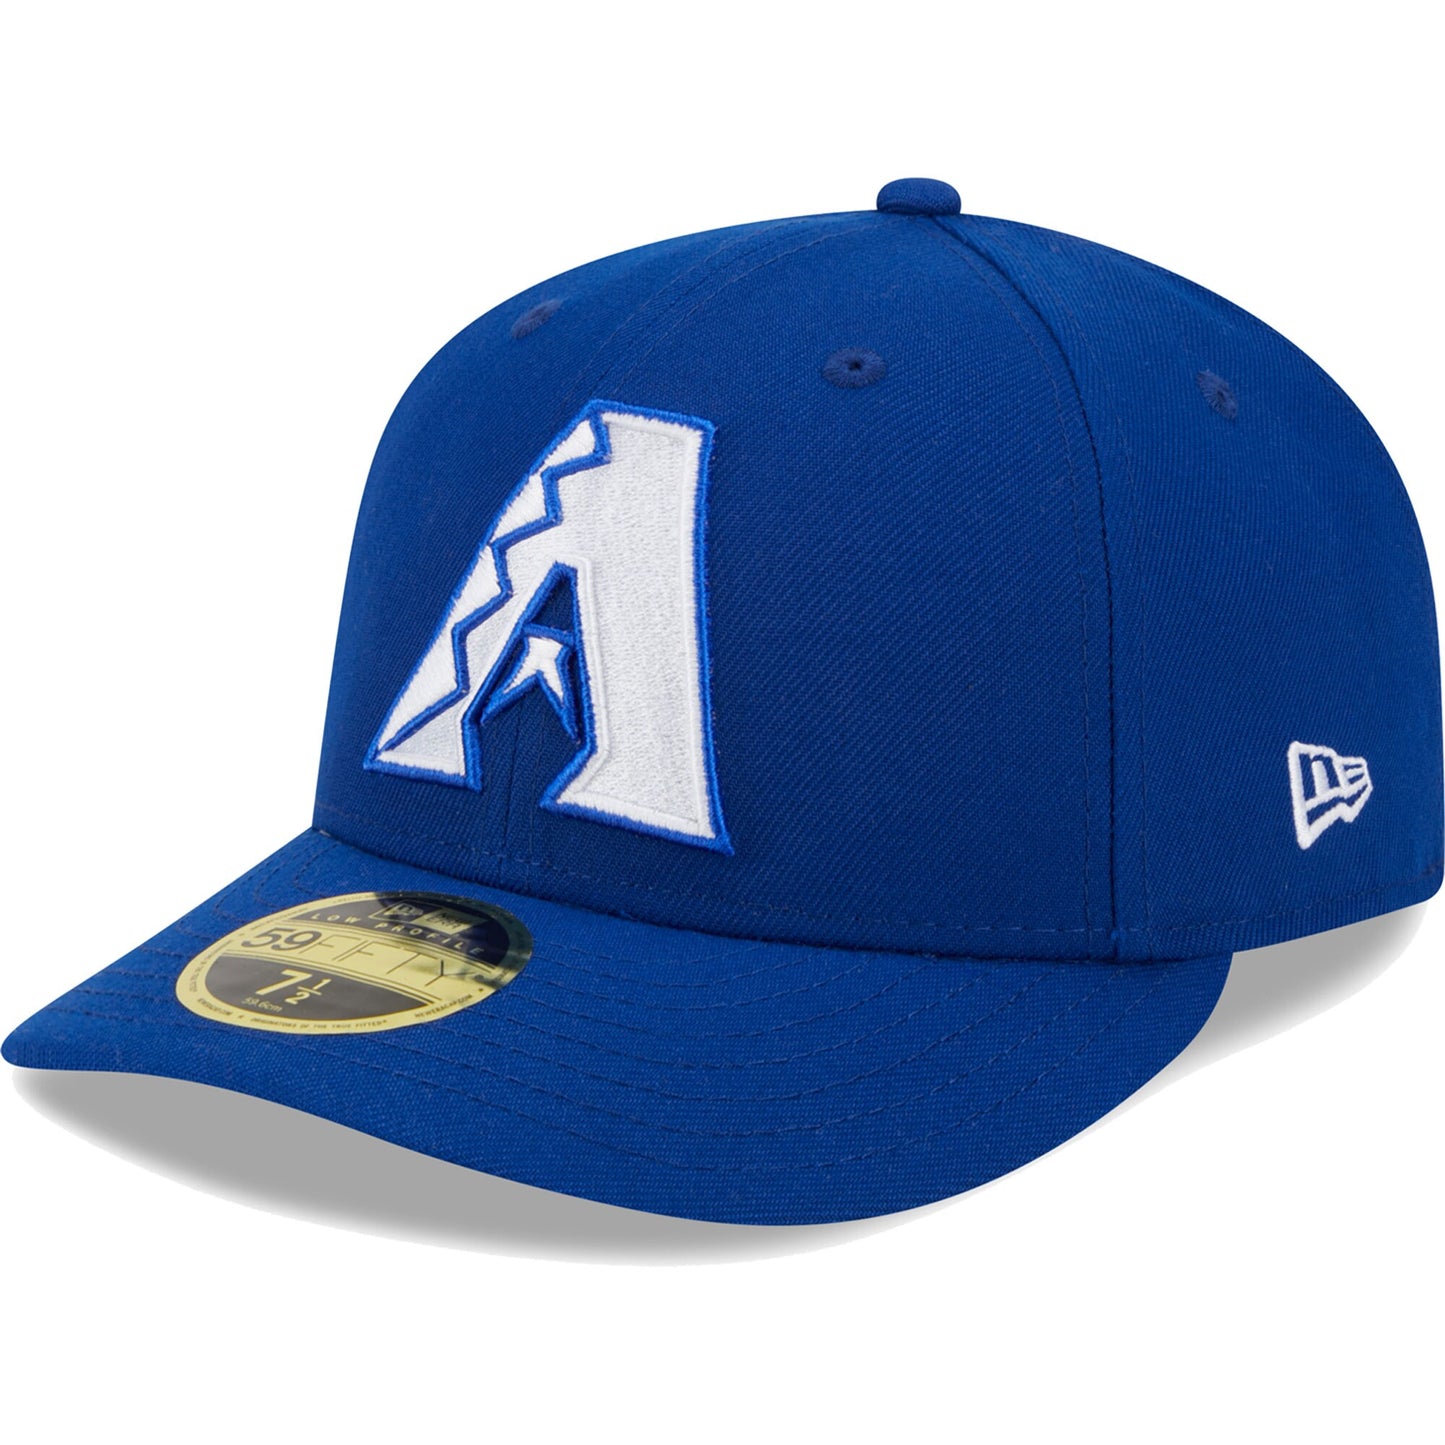 Arizona Diamondbacks New Era White Logo?Low Profile 59FIFTY Fitted Hat - Royal